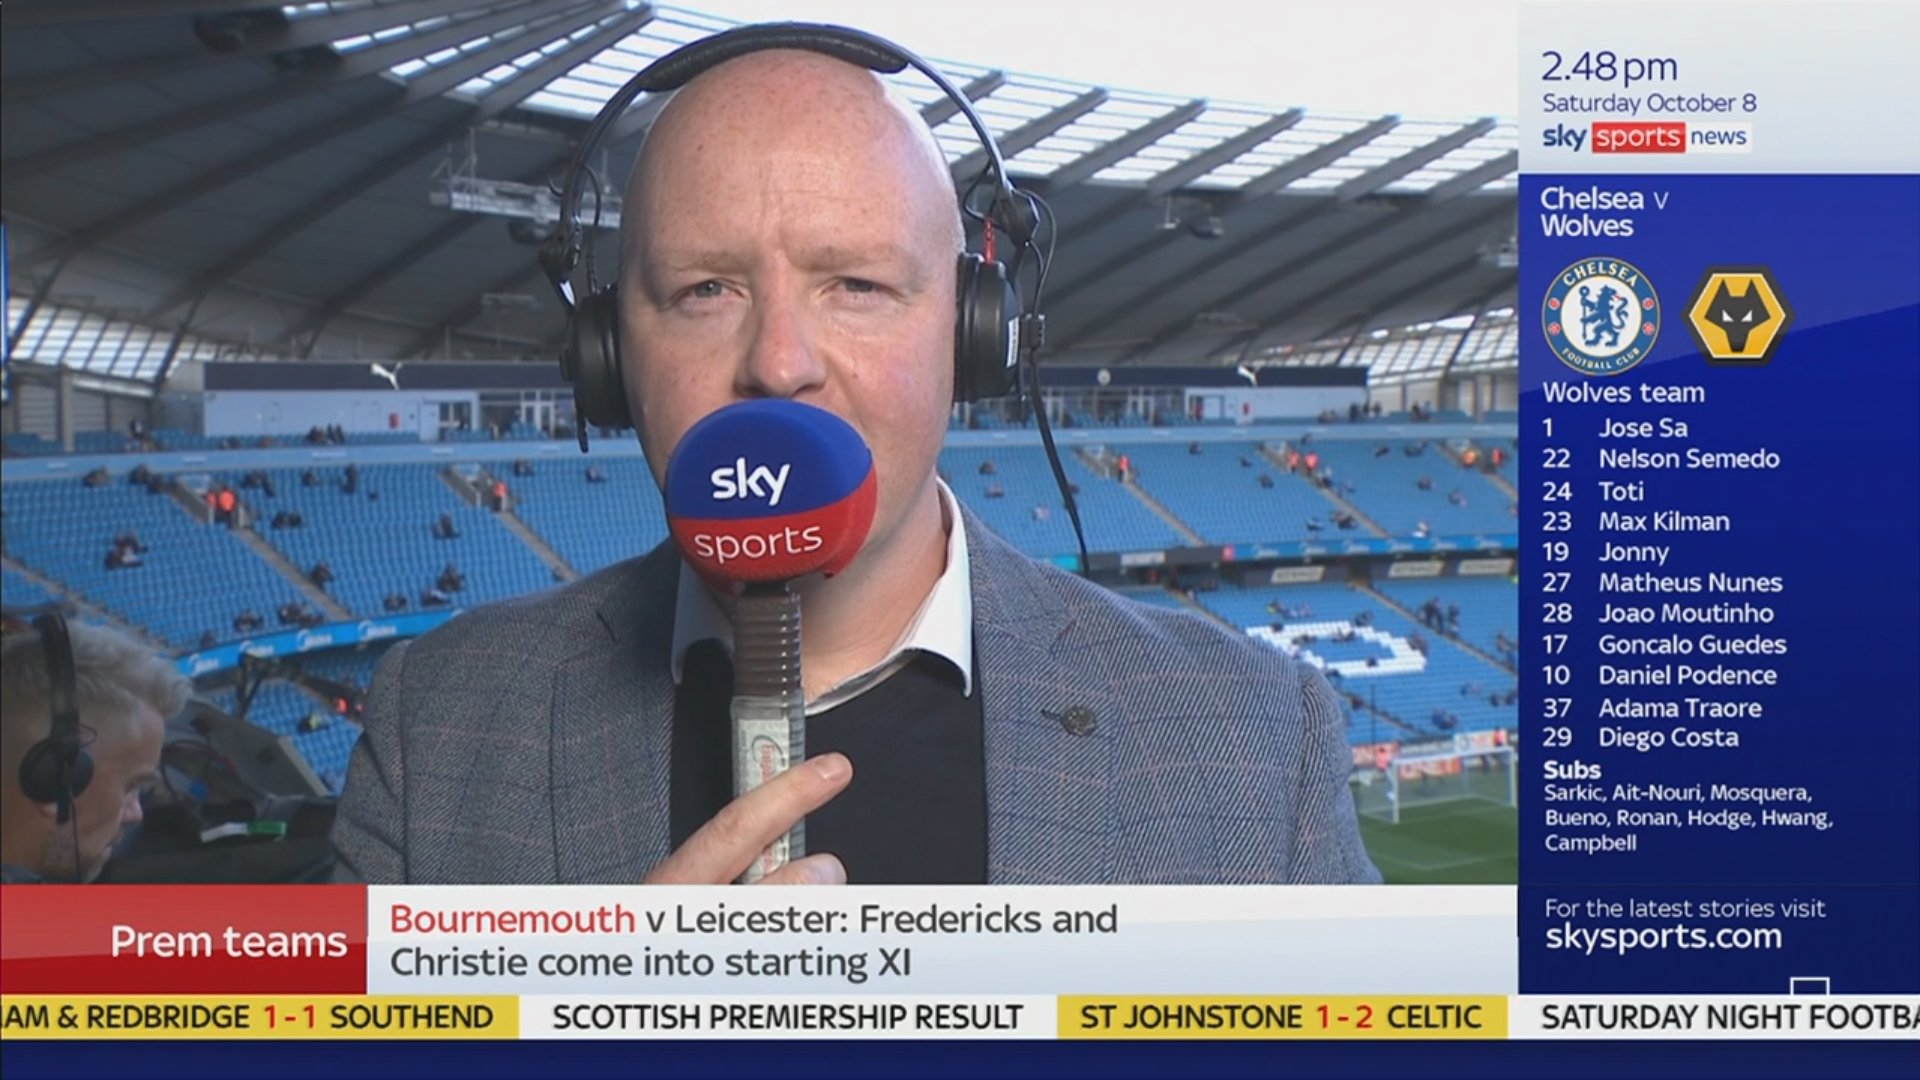 David Stowell on Sky Sports